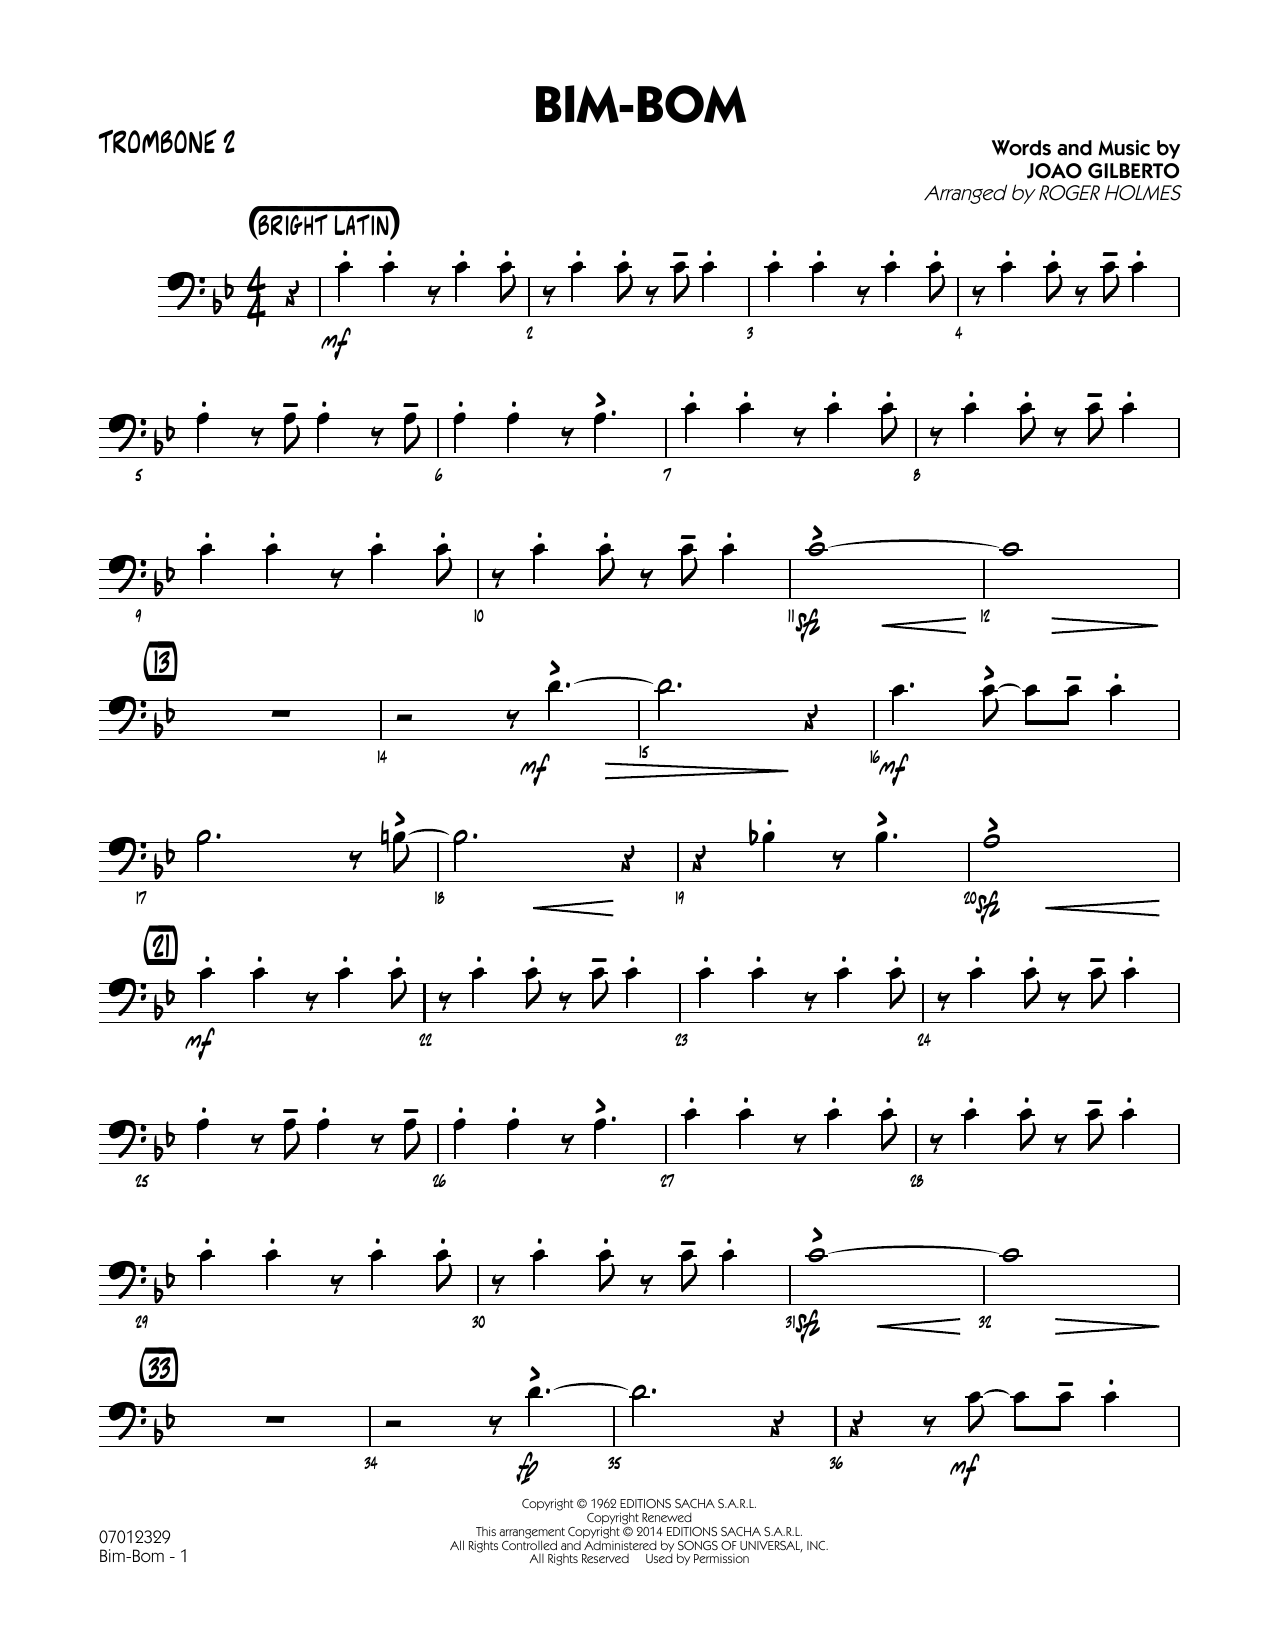 Roger Holmes Bim-Bom - Trombone 2 sheet music notes and chords. Download Printable PDF.